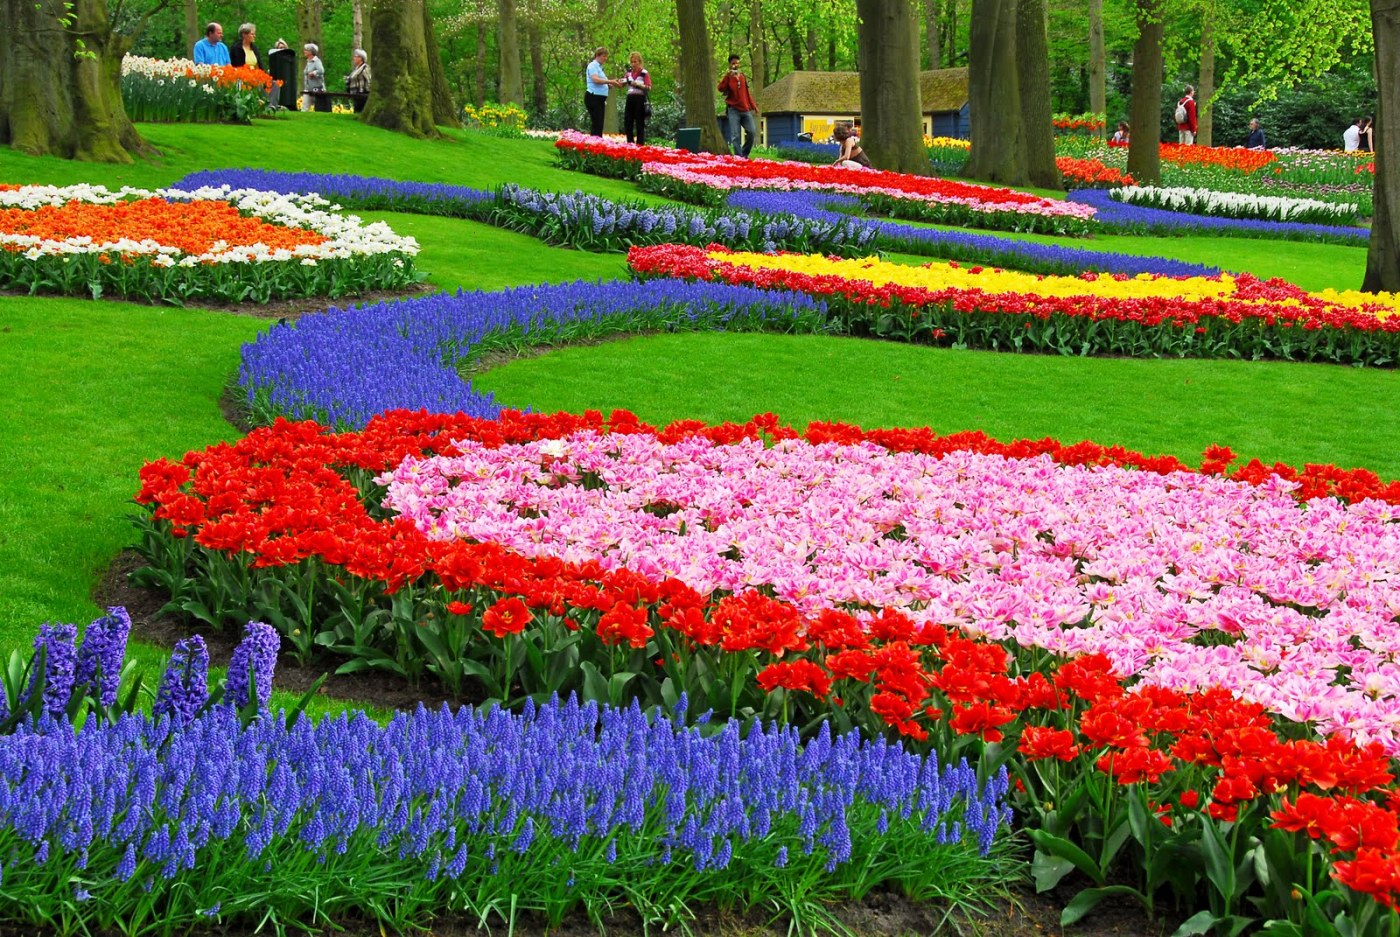 Gambar Pemandangan Taman Bunga Foto Tulip Flower Garden Wallpapers Umikarisma